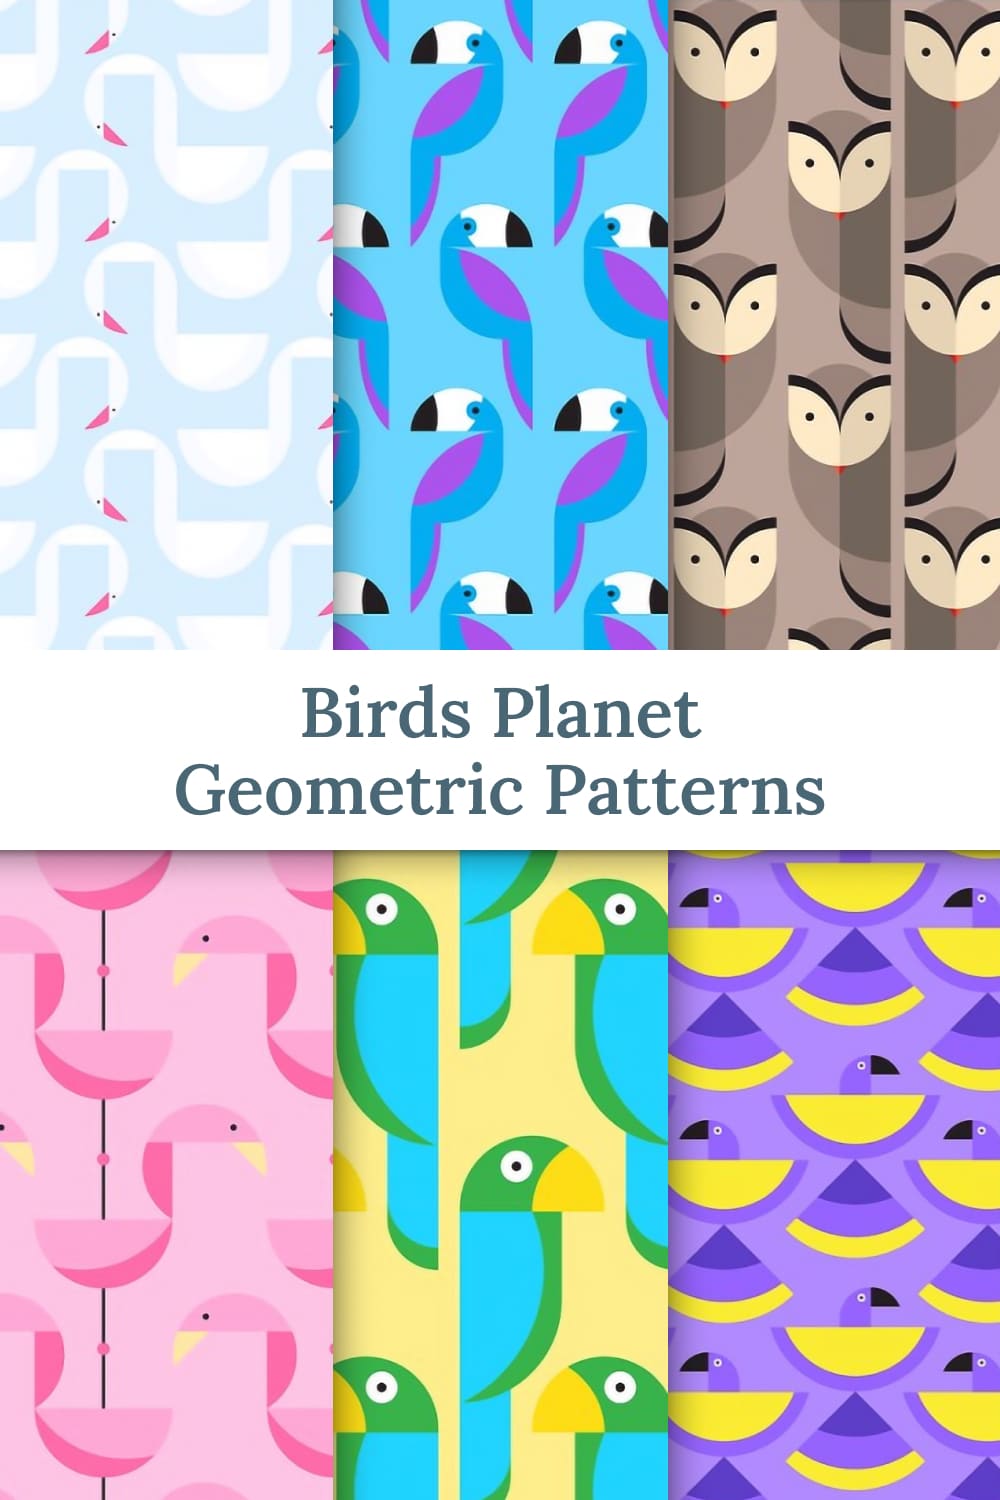 Birds Planet Geometric Patterns - pinterest image preview.